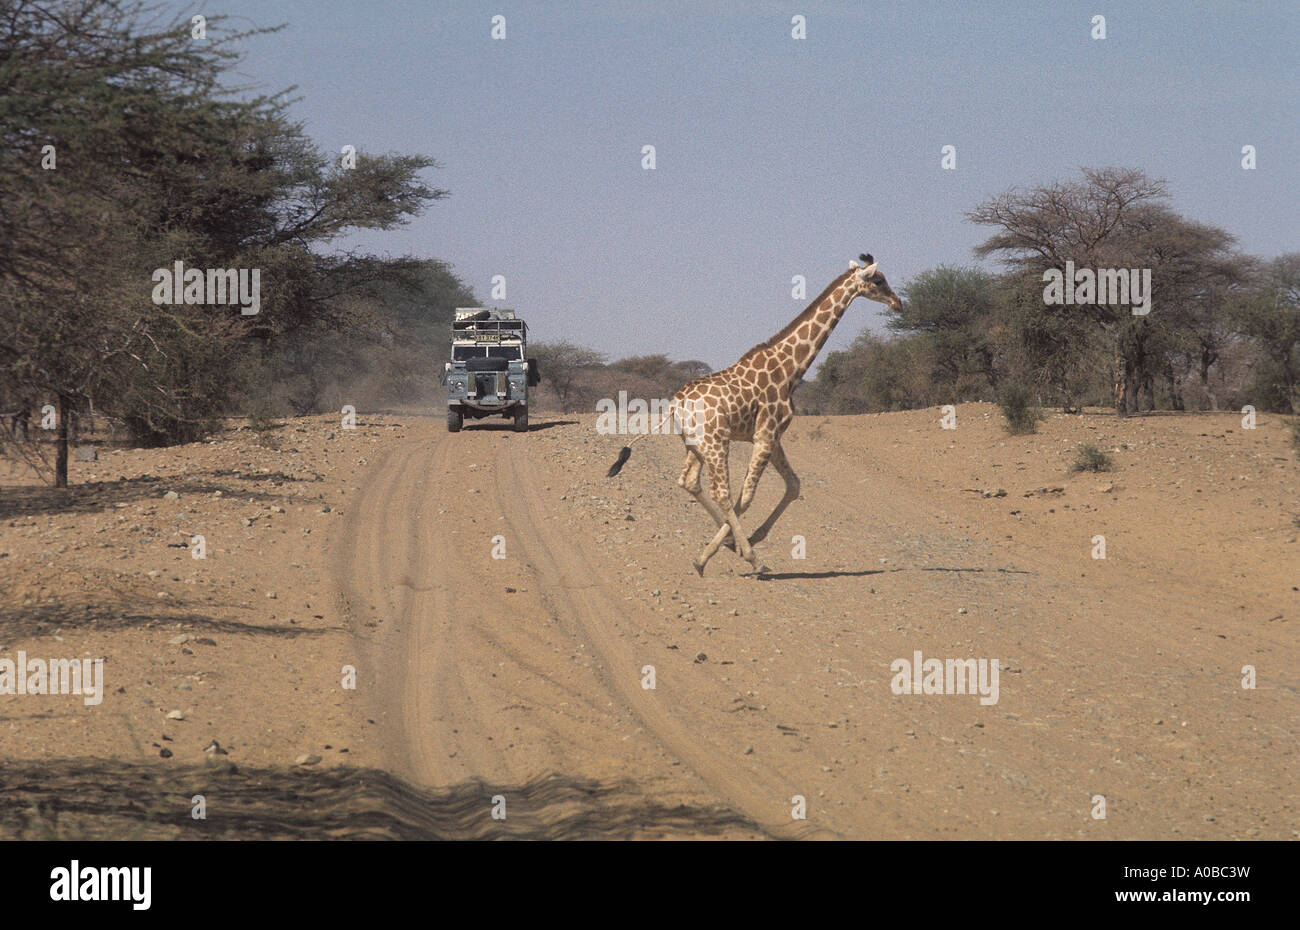 0243 03 A Giraffe Giraffa camelopardalis crosses the piste in front of a Land Rover Series IIA one ton model Stock Photo